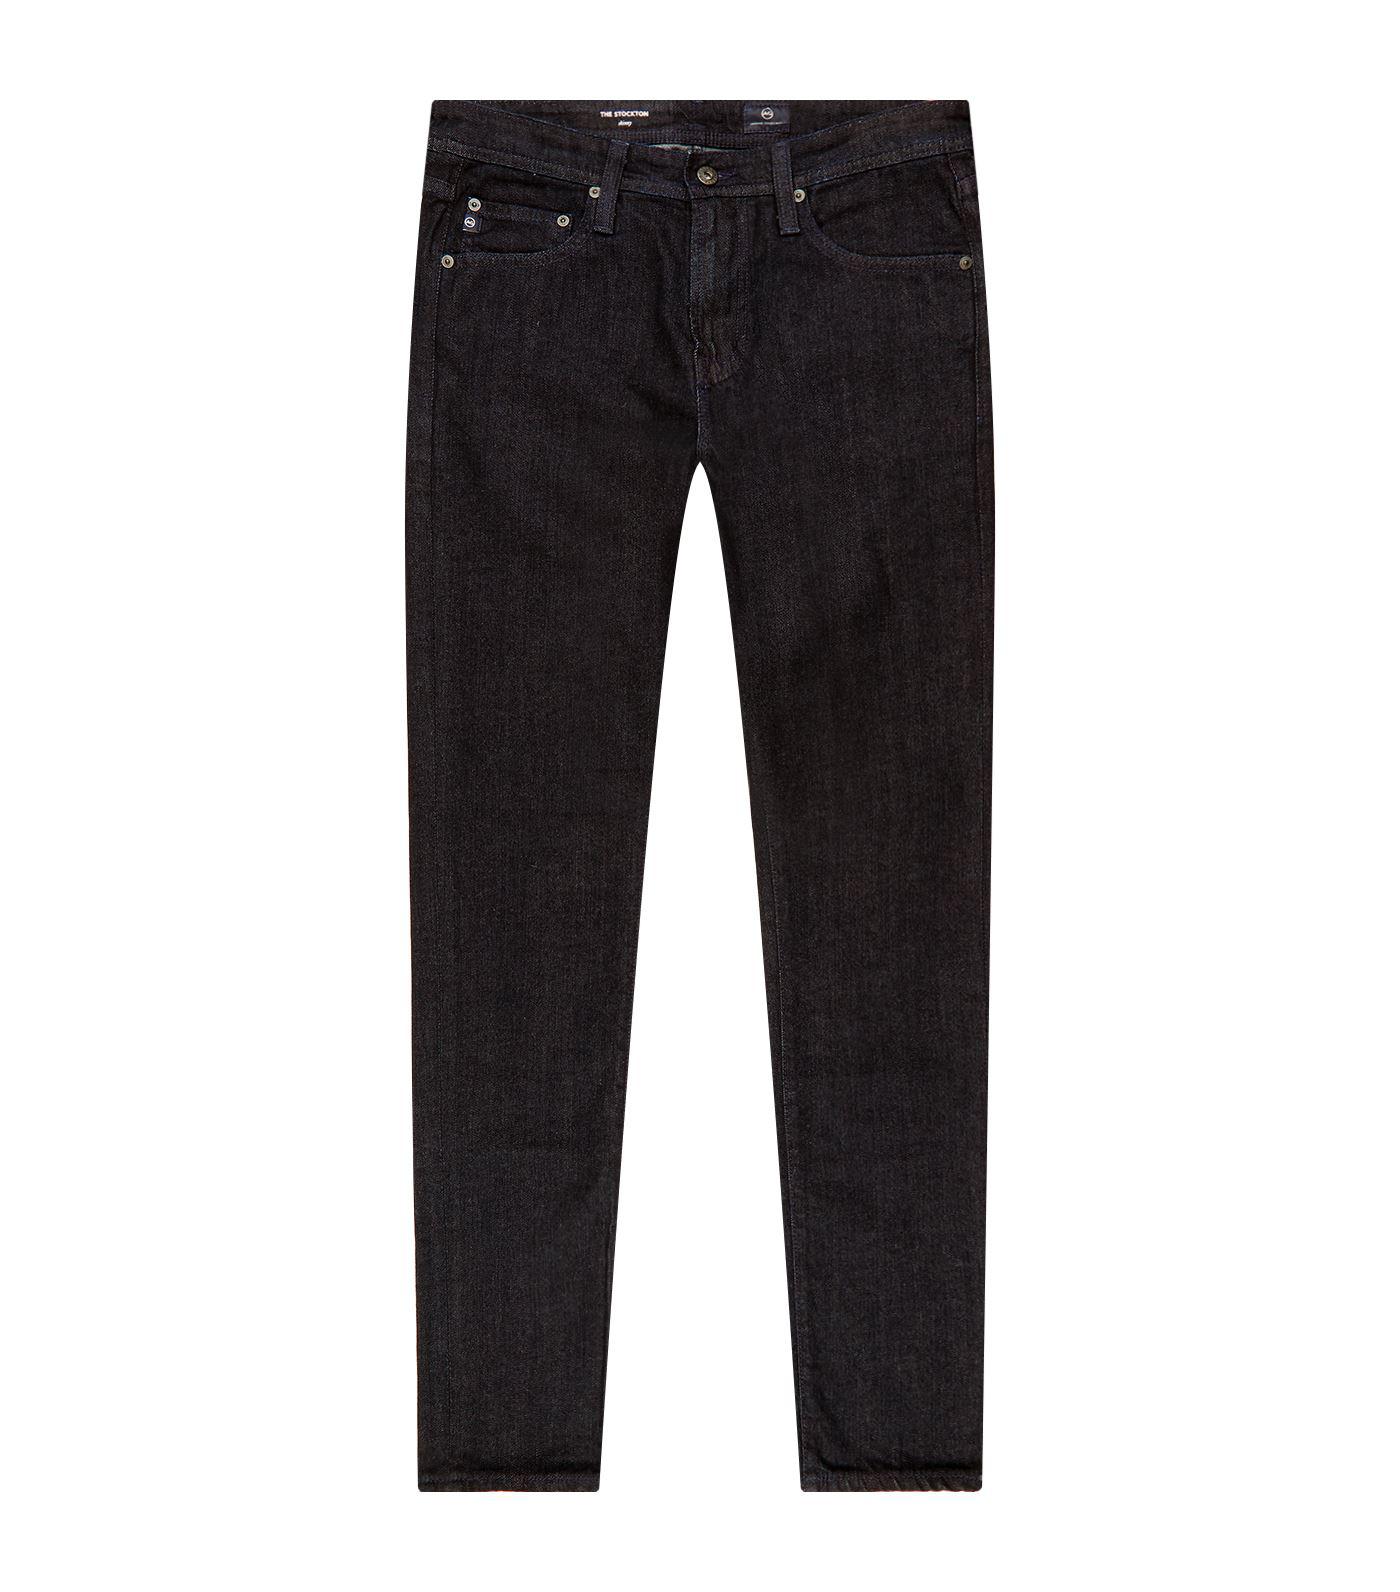 AG Jeans The Stockton Skinny Fit Denim Jeans in Blue for Men - Lyst